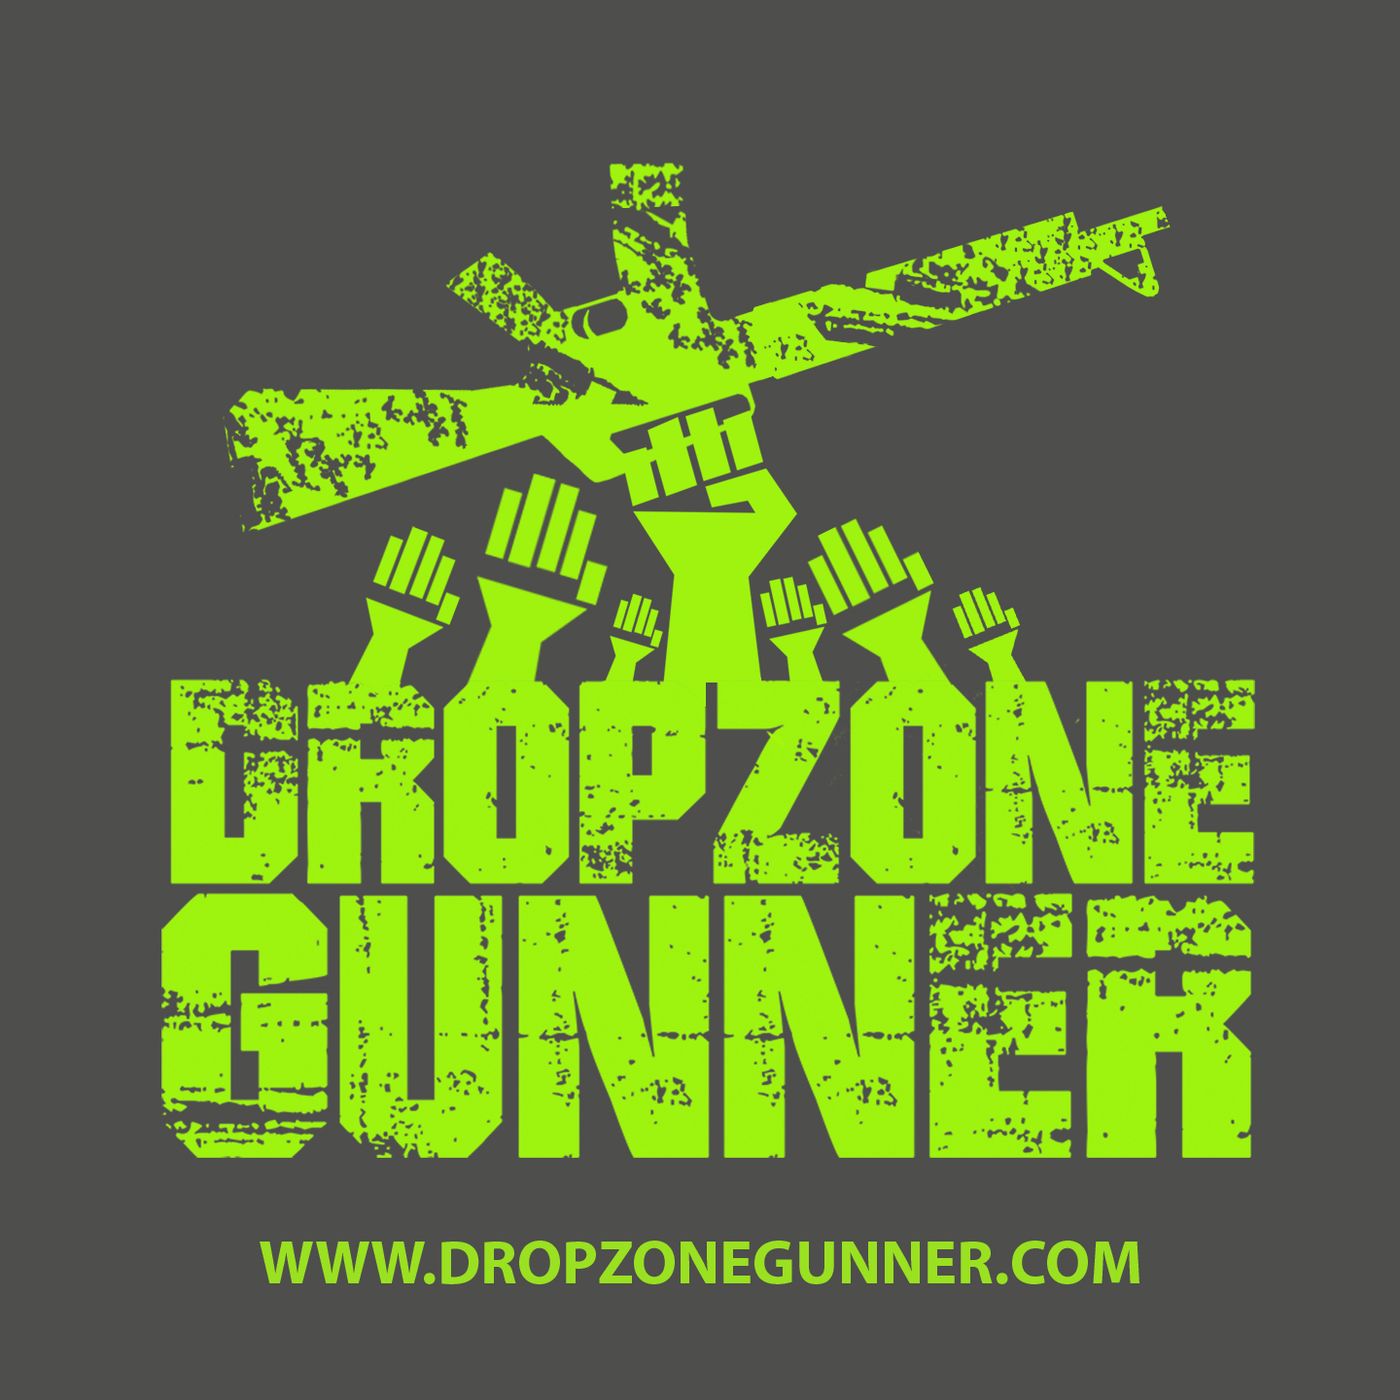 Startup Street Presents: Dropzone Gunner